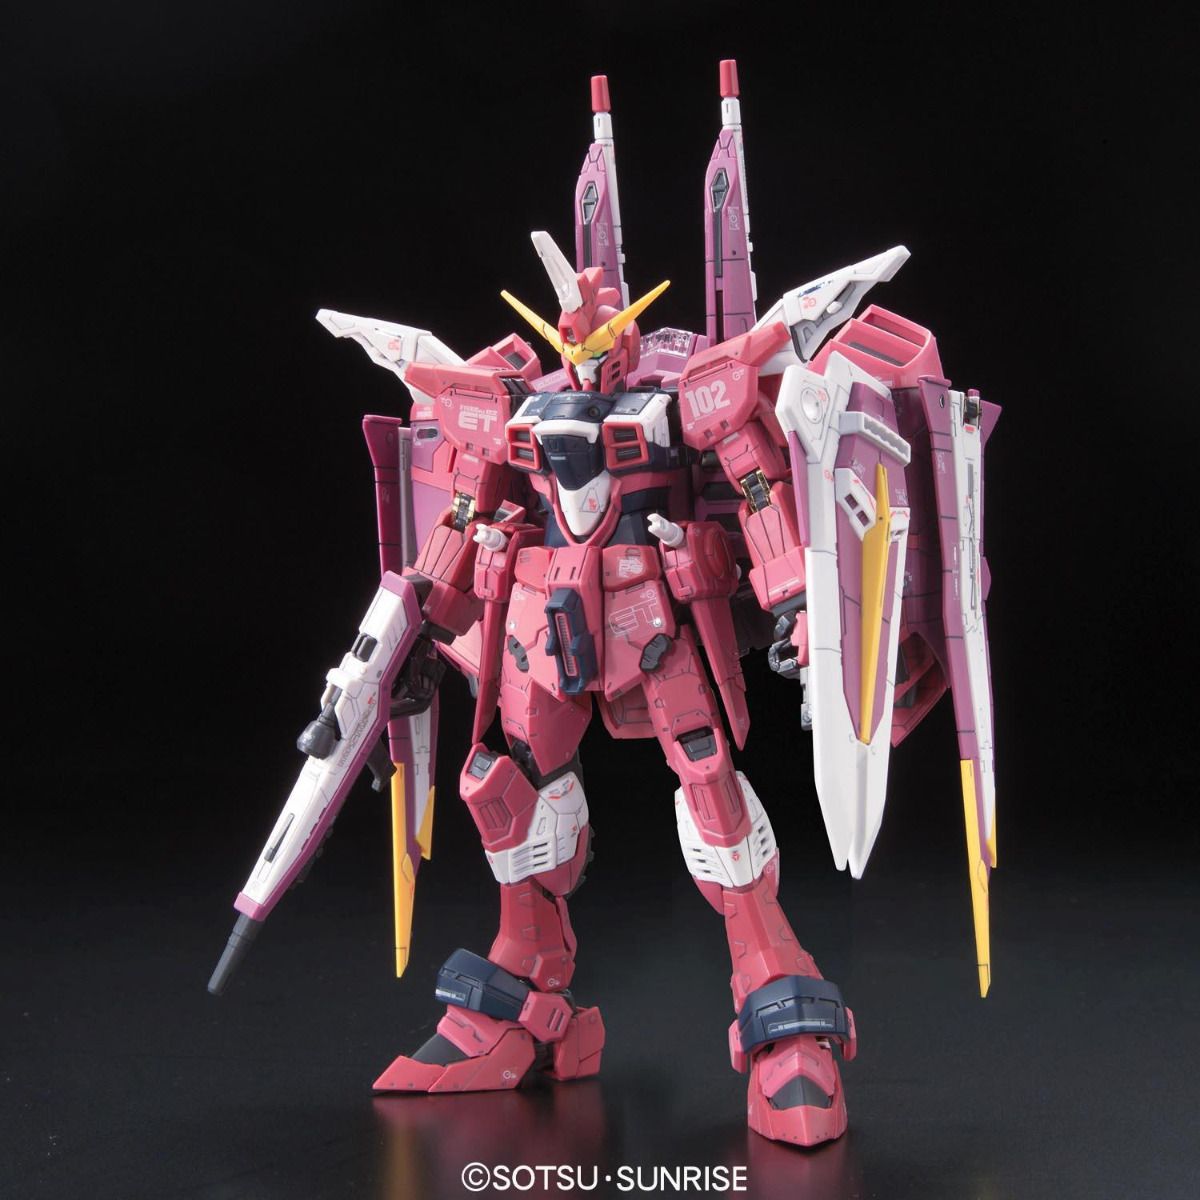 ONHAND RG 1/144 ZGMF-X09A Justice Gundam